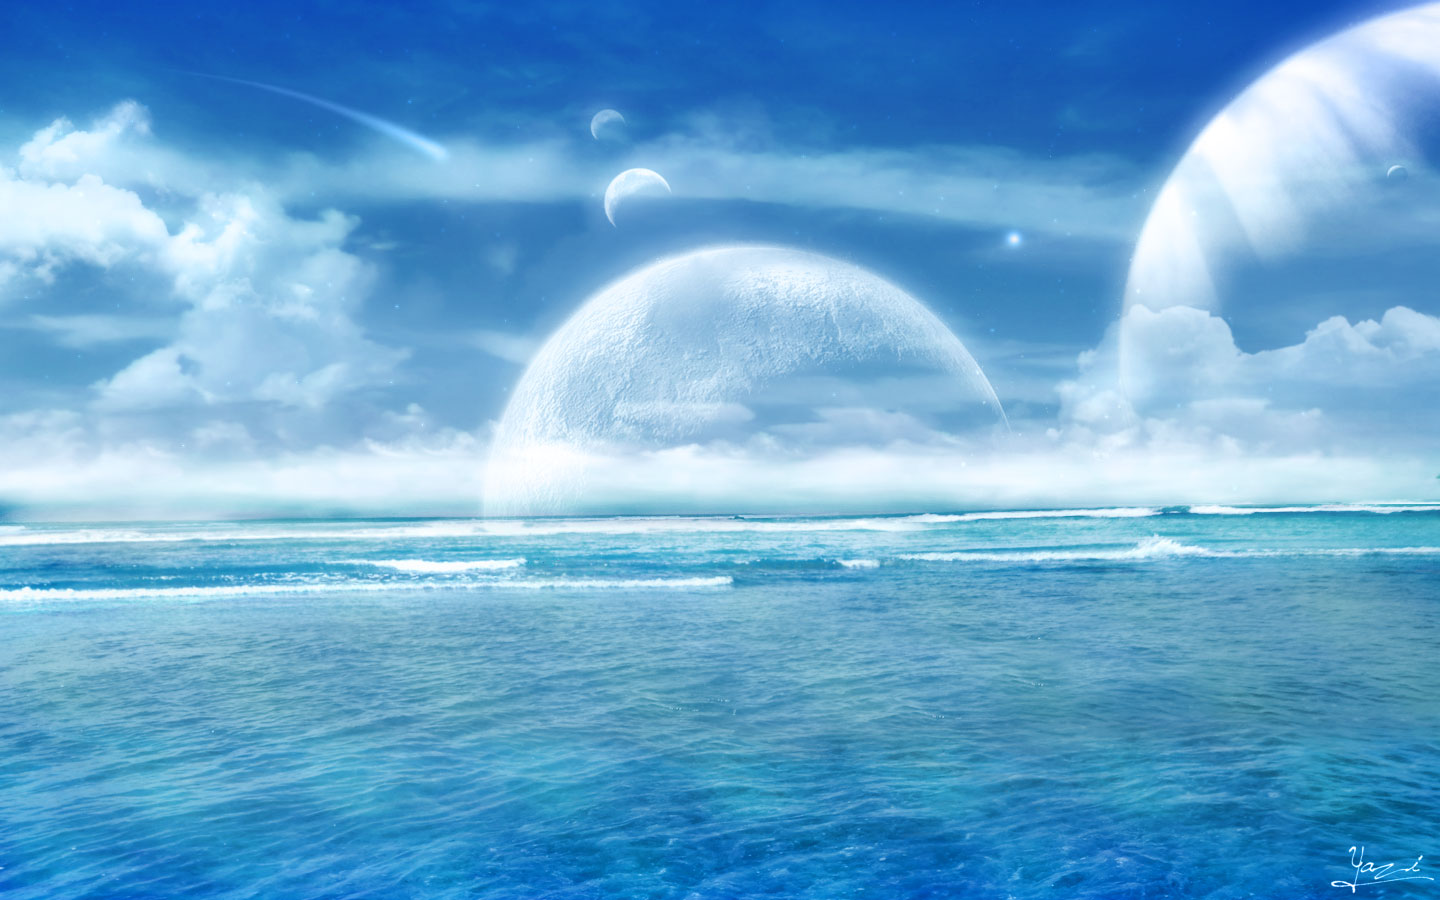  Magical Ocean Horizon Widescreen Wallpaper Hd Wide Desktop Background